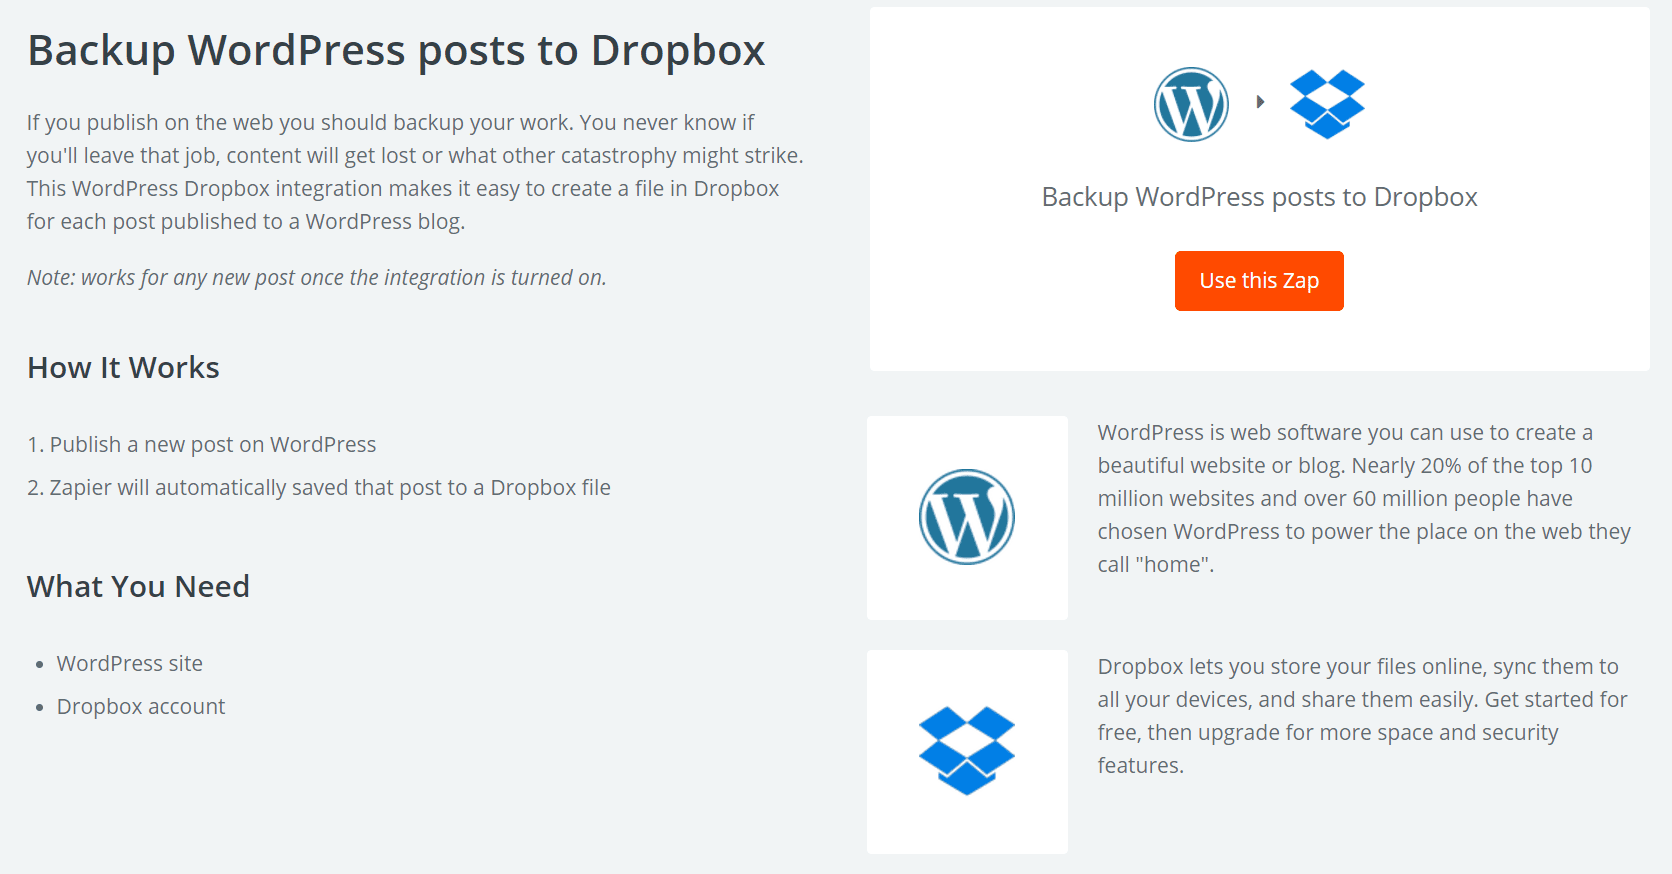 The Dropbox integration Zap.